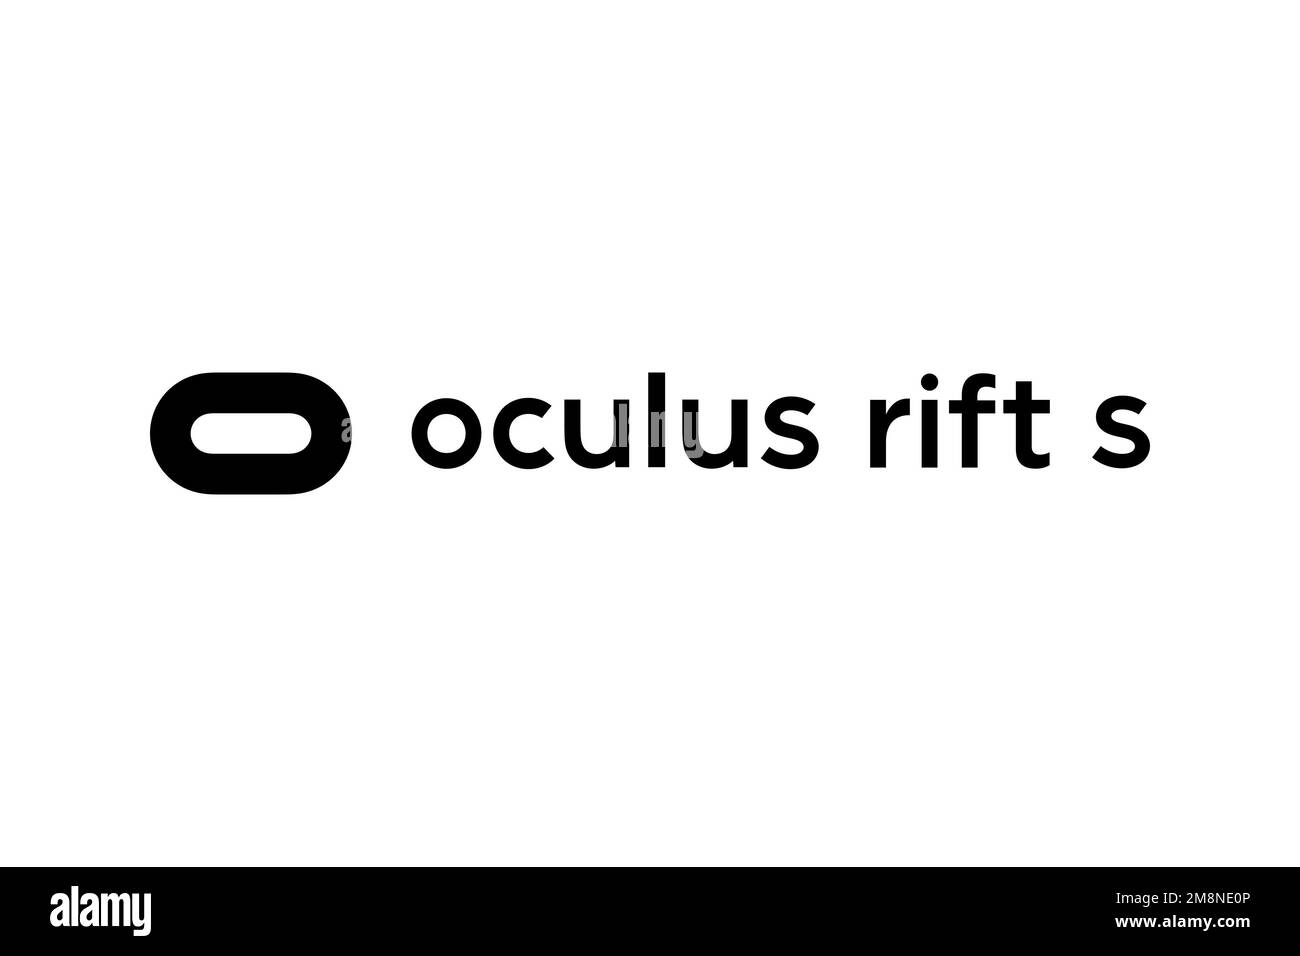 Oculus logo Black and White Stock Photos & Images - Alamy